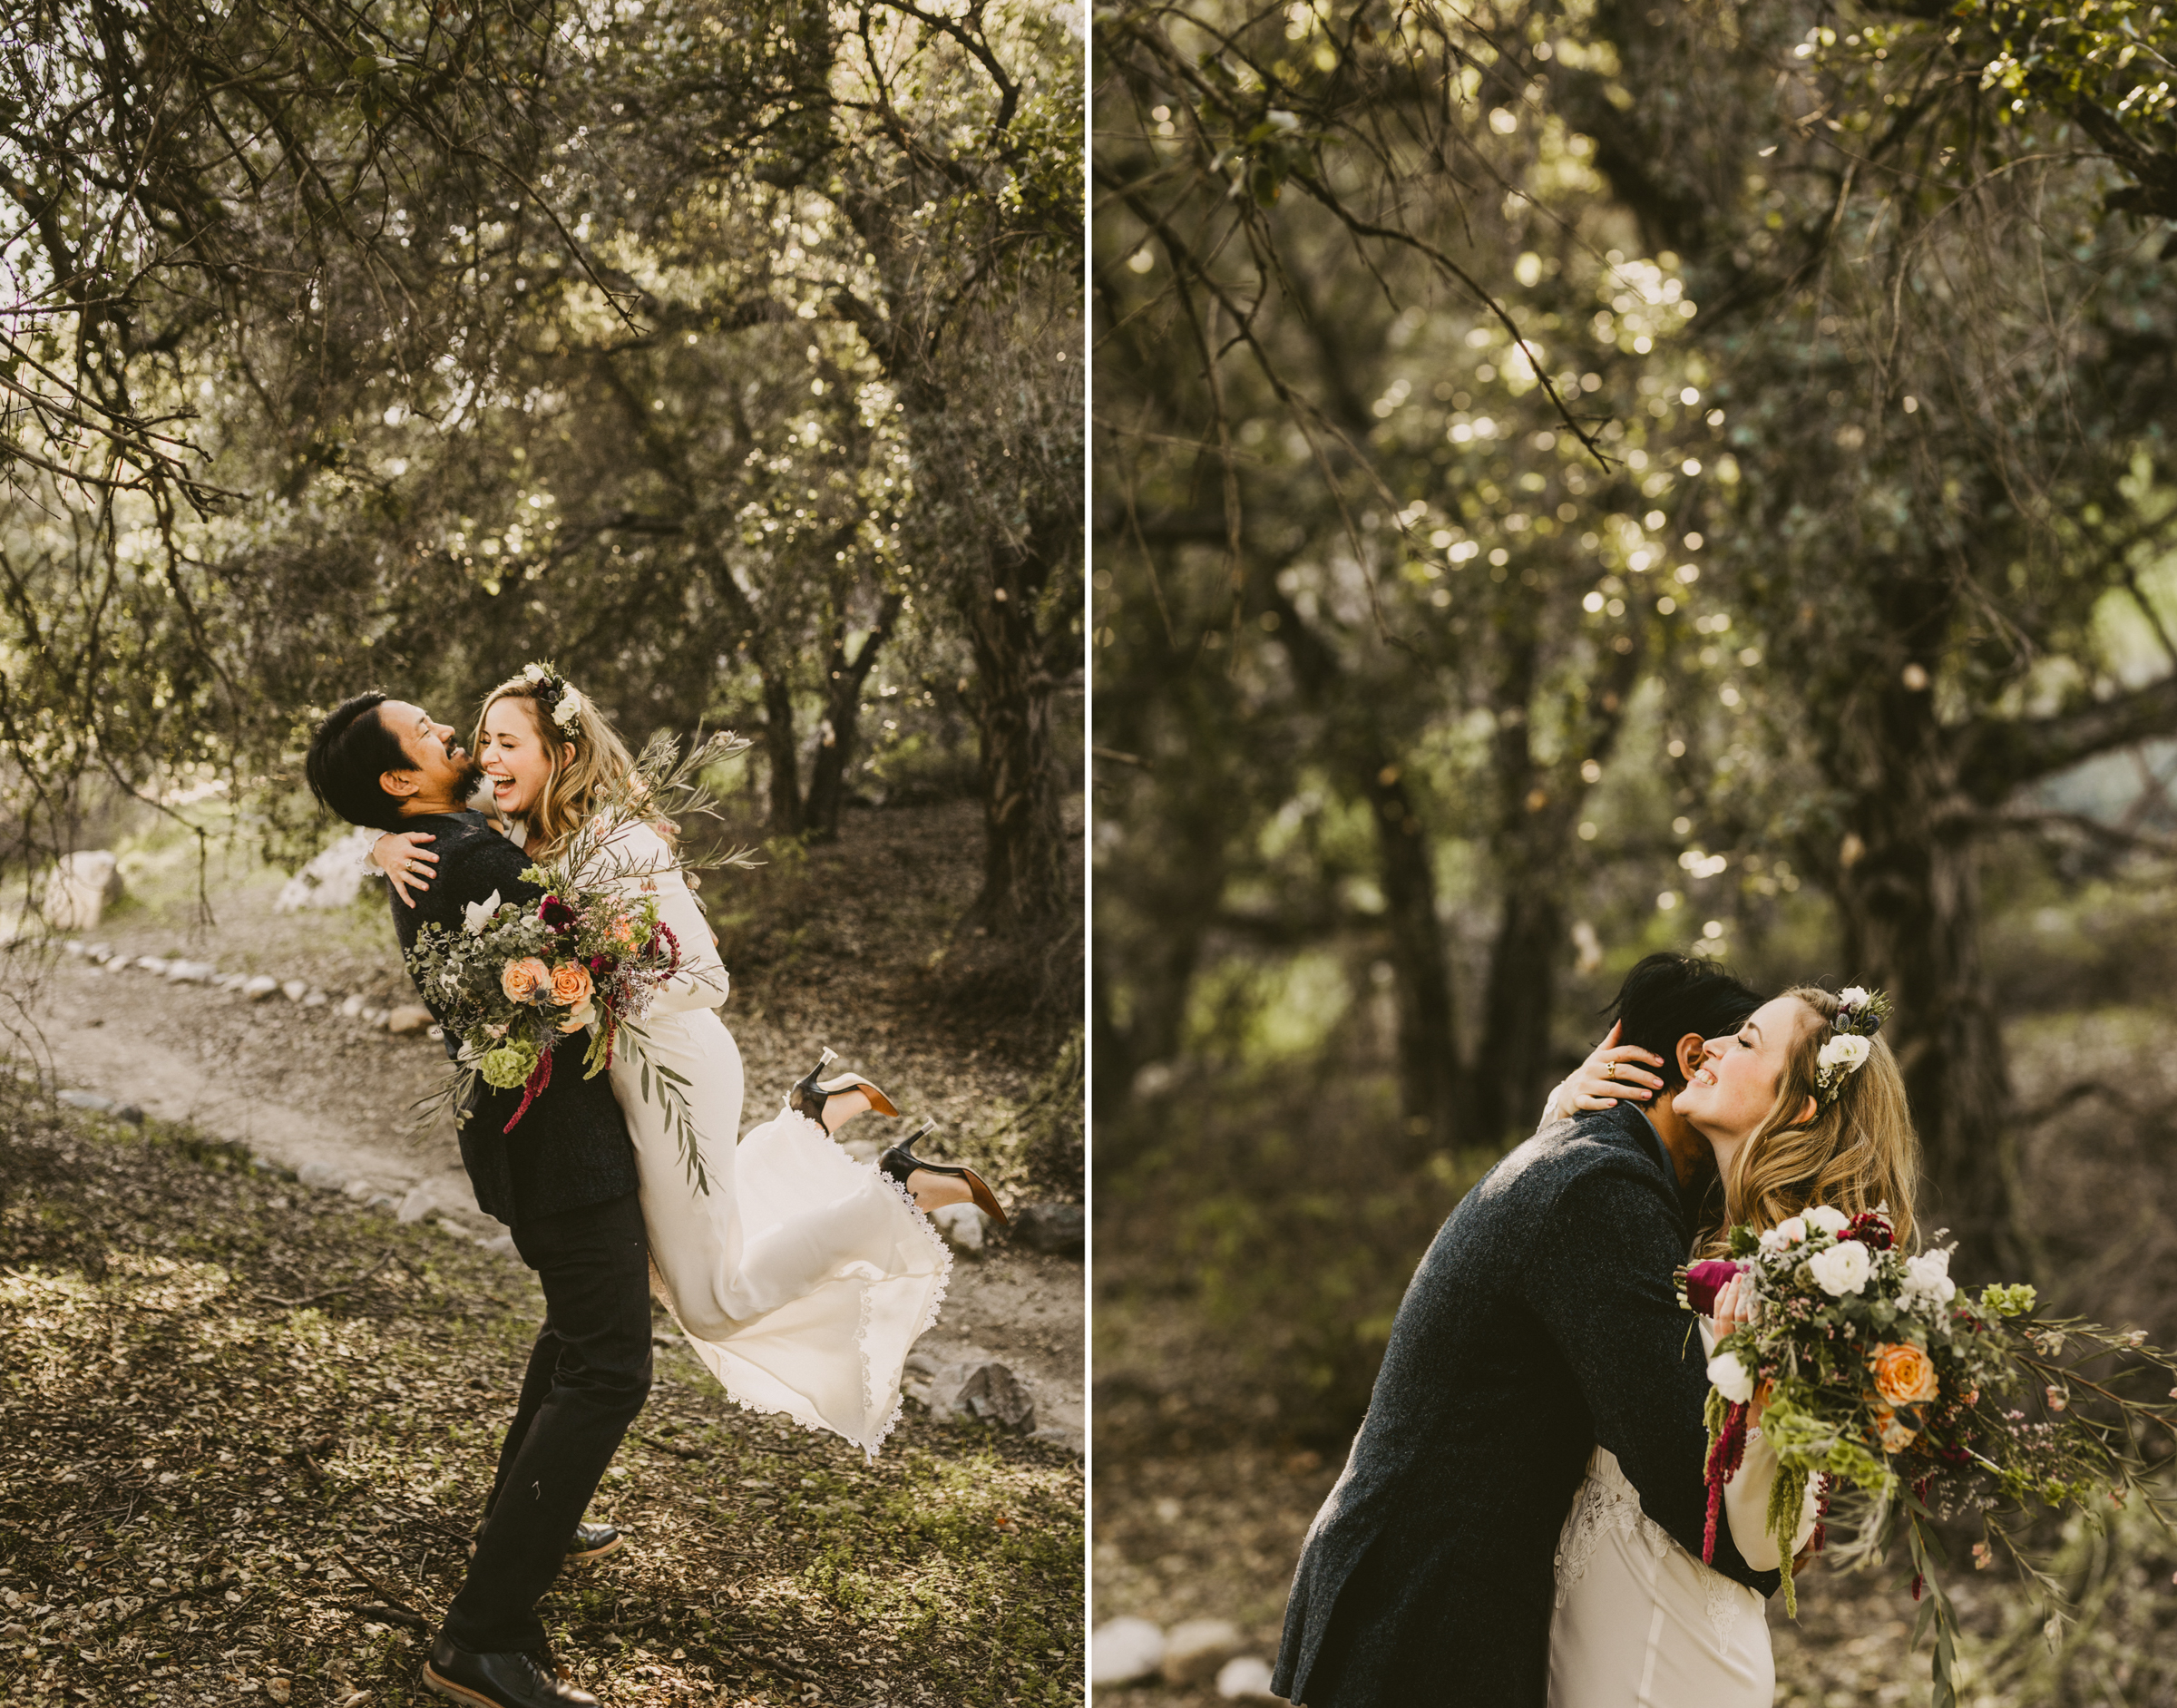 ©Isaiah + Taylor Photography - Intimate Elopement, Eaton Canyon, Los Angeles Wedding Photographer-15.jpg